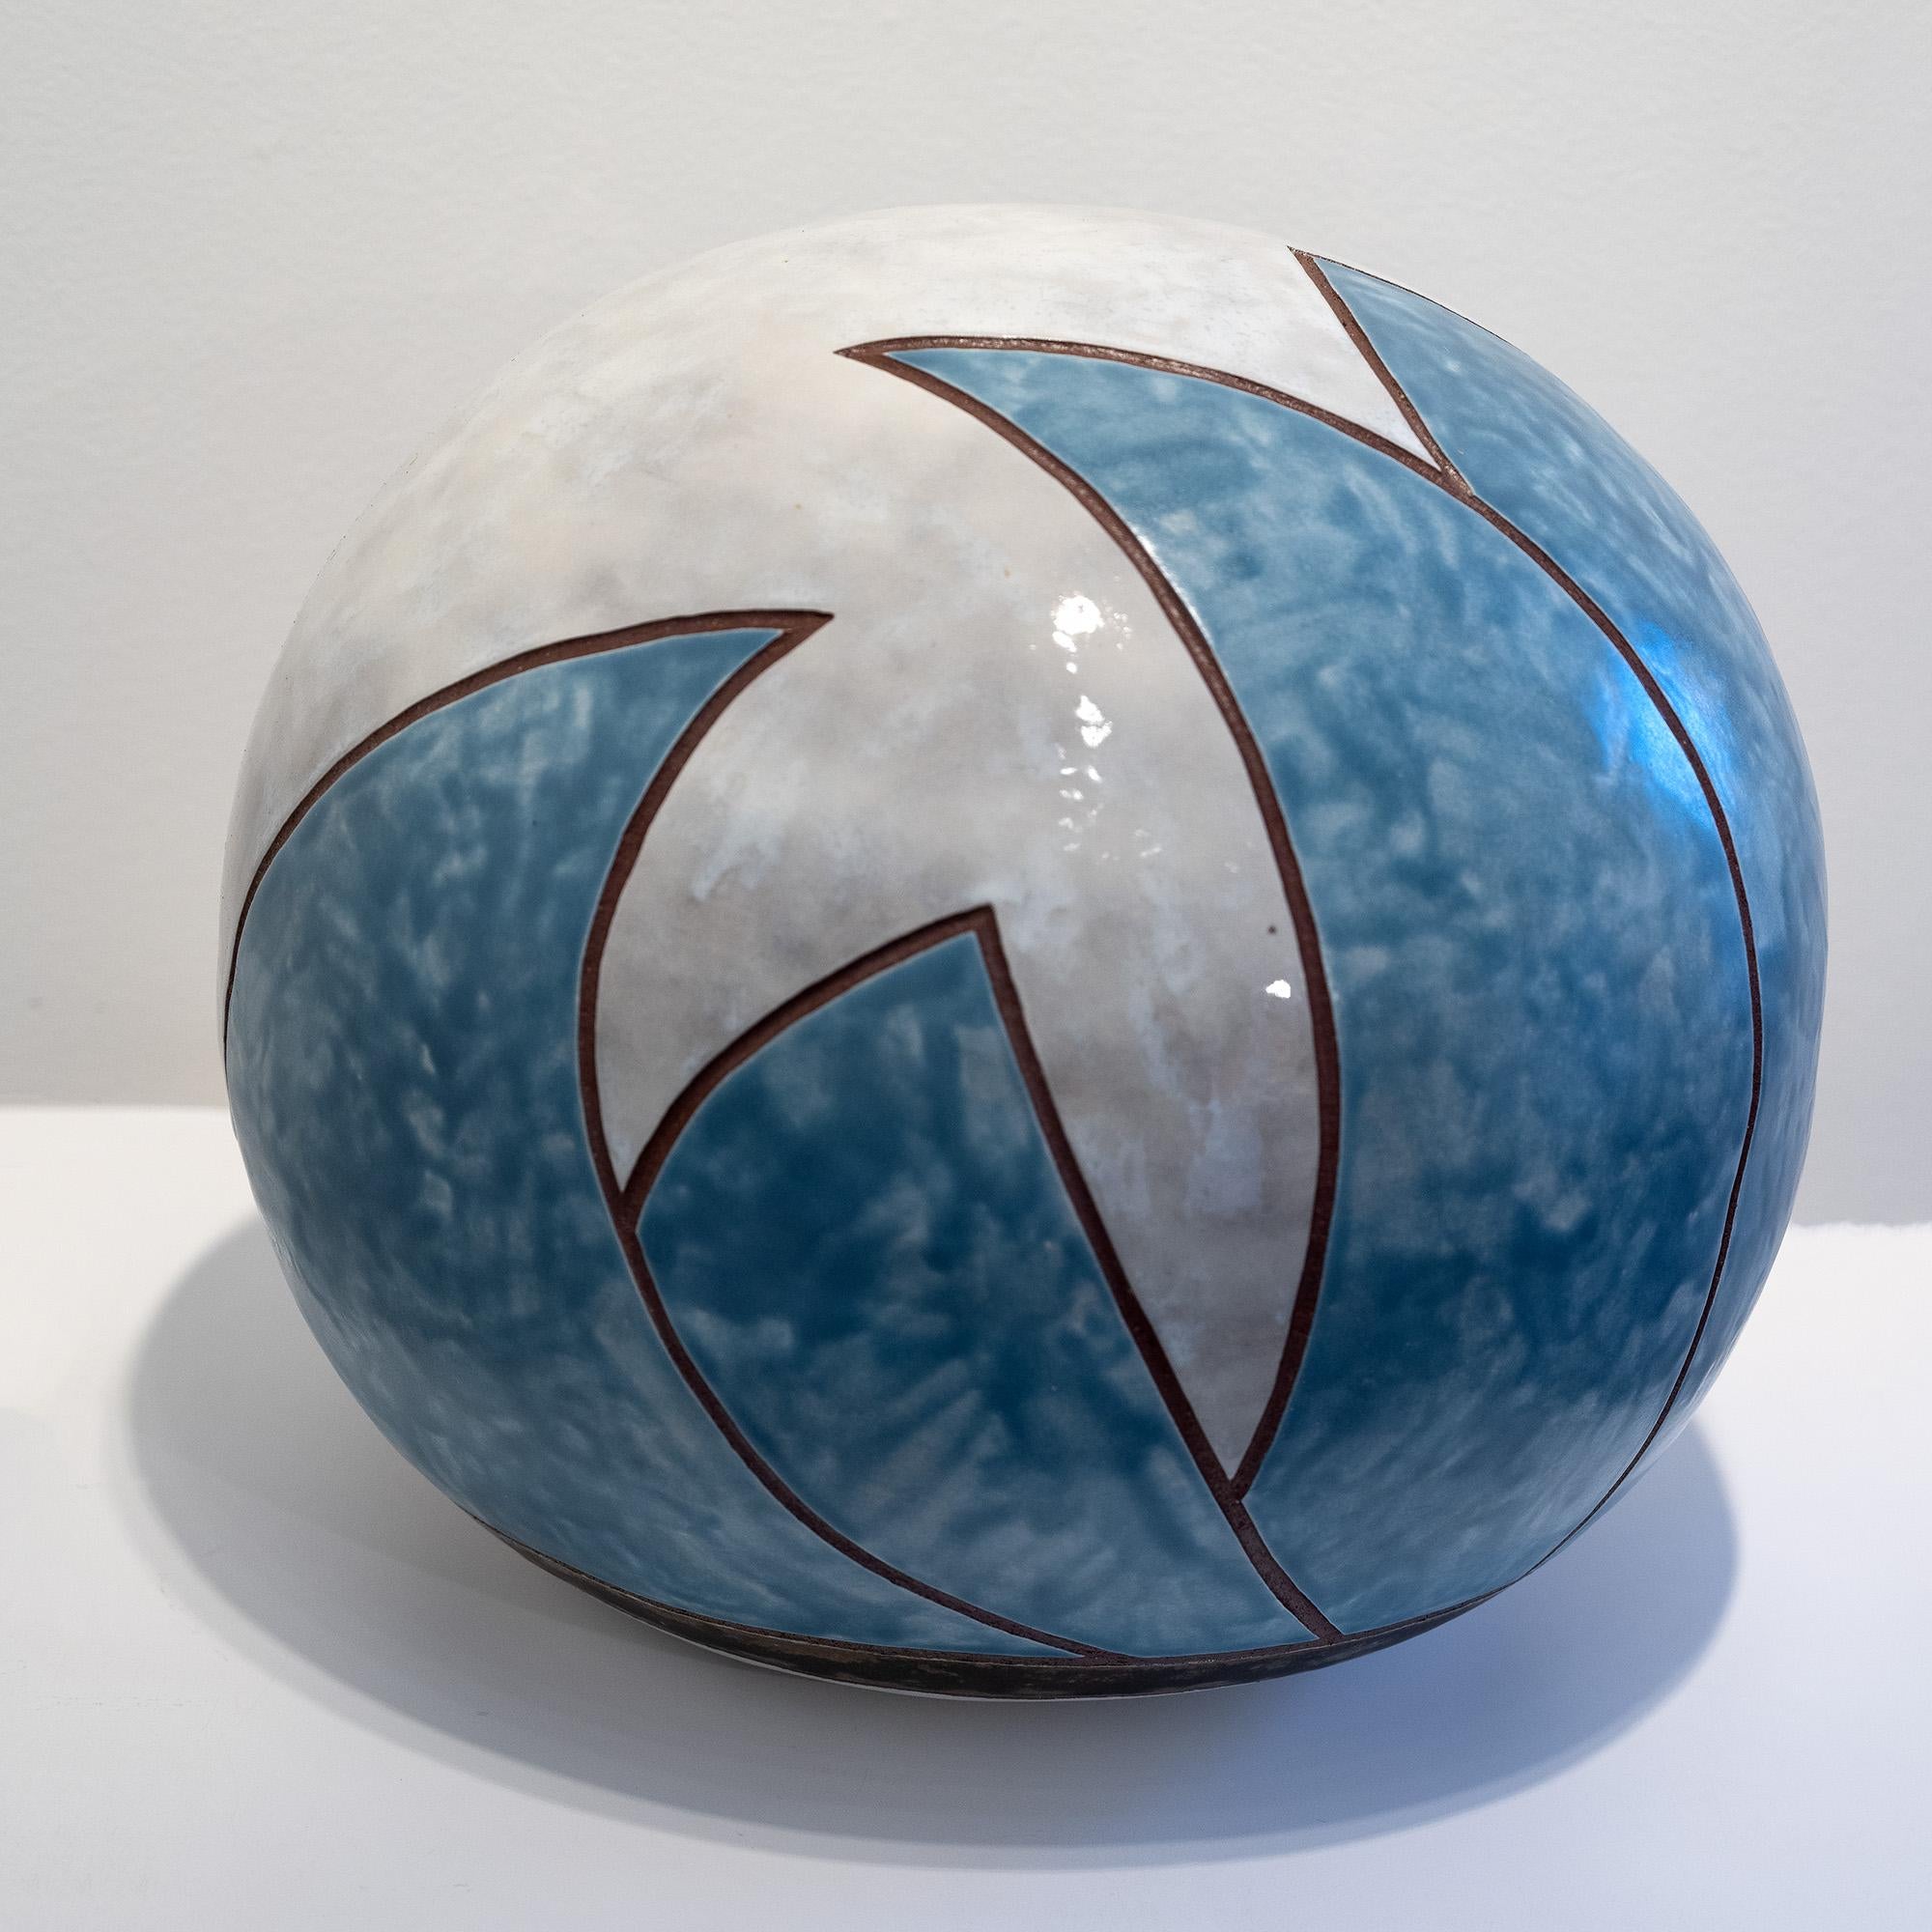 Frances Parker Abstract Sculpture - Marbles for Atlas 6